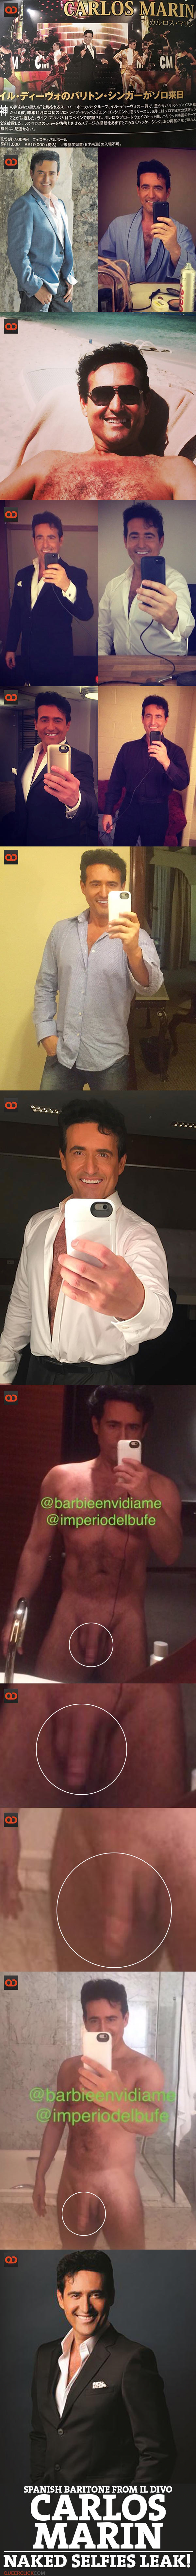 Carlos Marin, Spanish Baritone From Il Divo, Naked Selfies Leak!